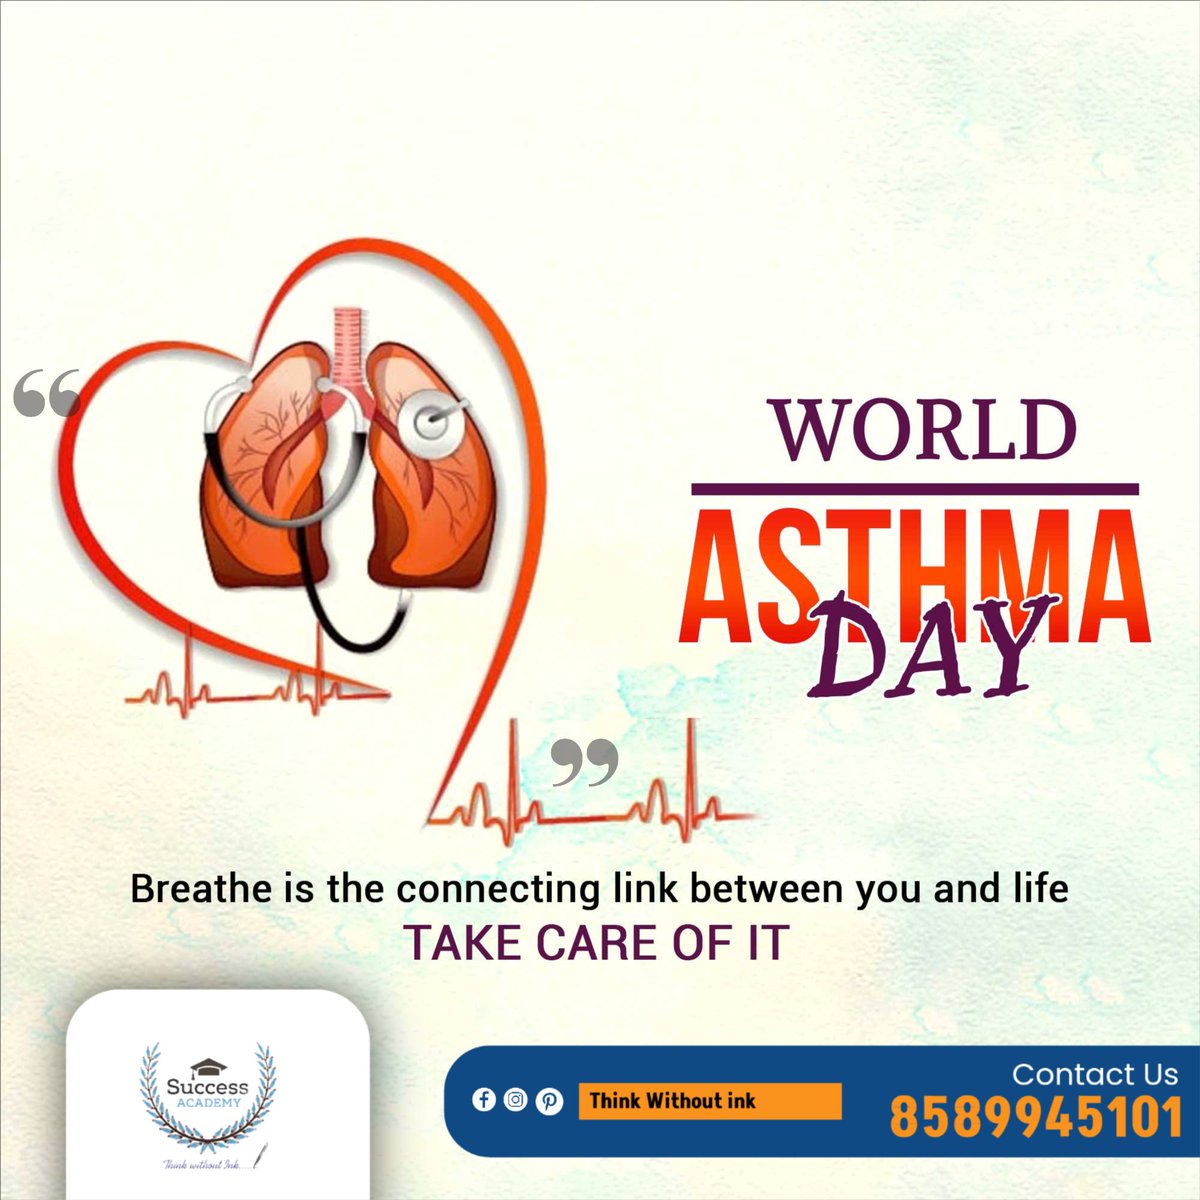 #WorldAsthmaDay #AsthmaAwareness #BreatheEasy #AsthmaSupport #InhalerLife #AsthmaManagement #AsthmaWarrior #AsthmaEducation #HealthyLungs
#RespiratoryHealth #AsthmaAction #AsthmaCommunity #OpenAirways #LungHealth
#AsthmaPrevention #SSCCoaching #BankCoaching #SuccessAcademyKochi